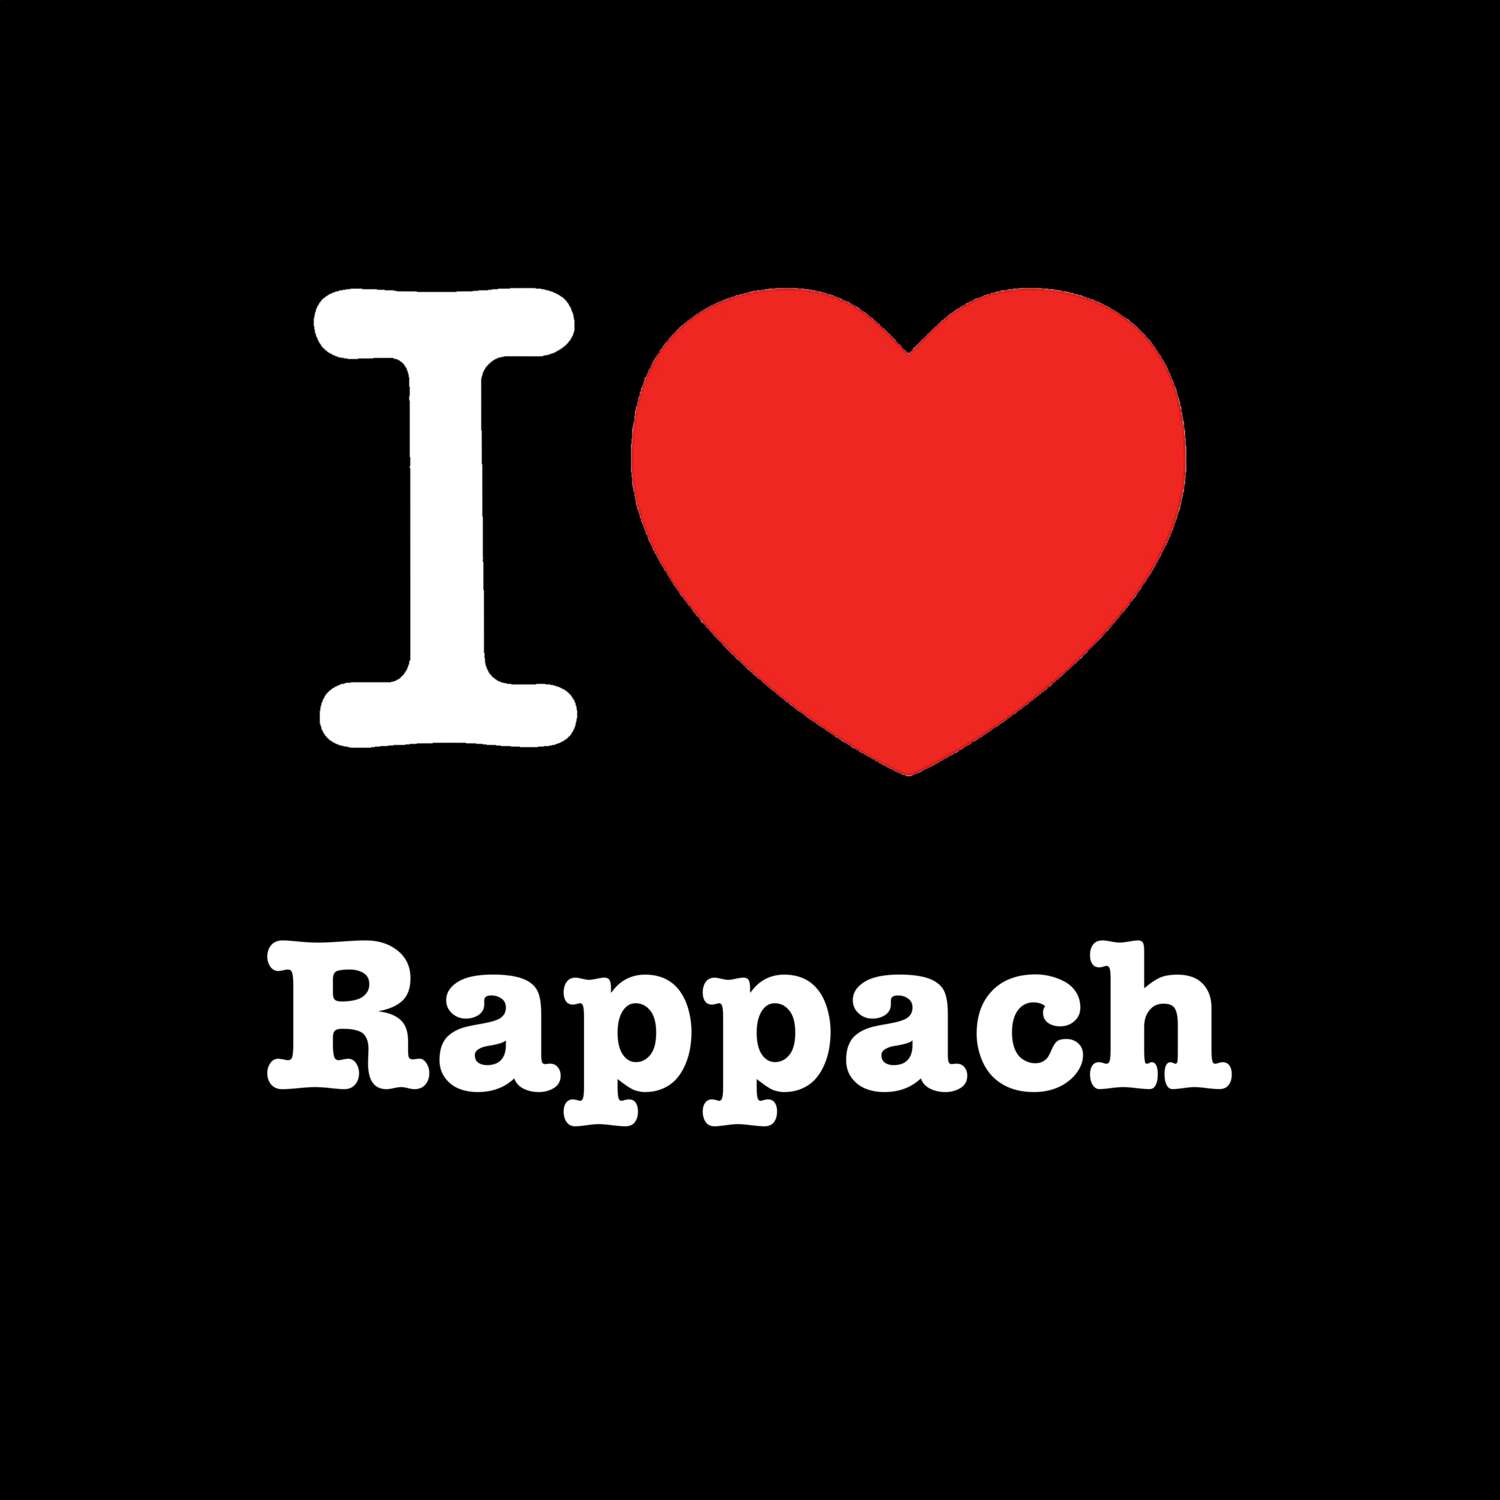 Rappach T-Shirt »I love«